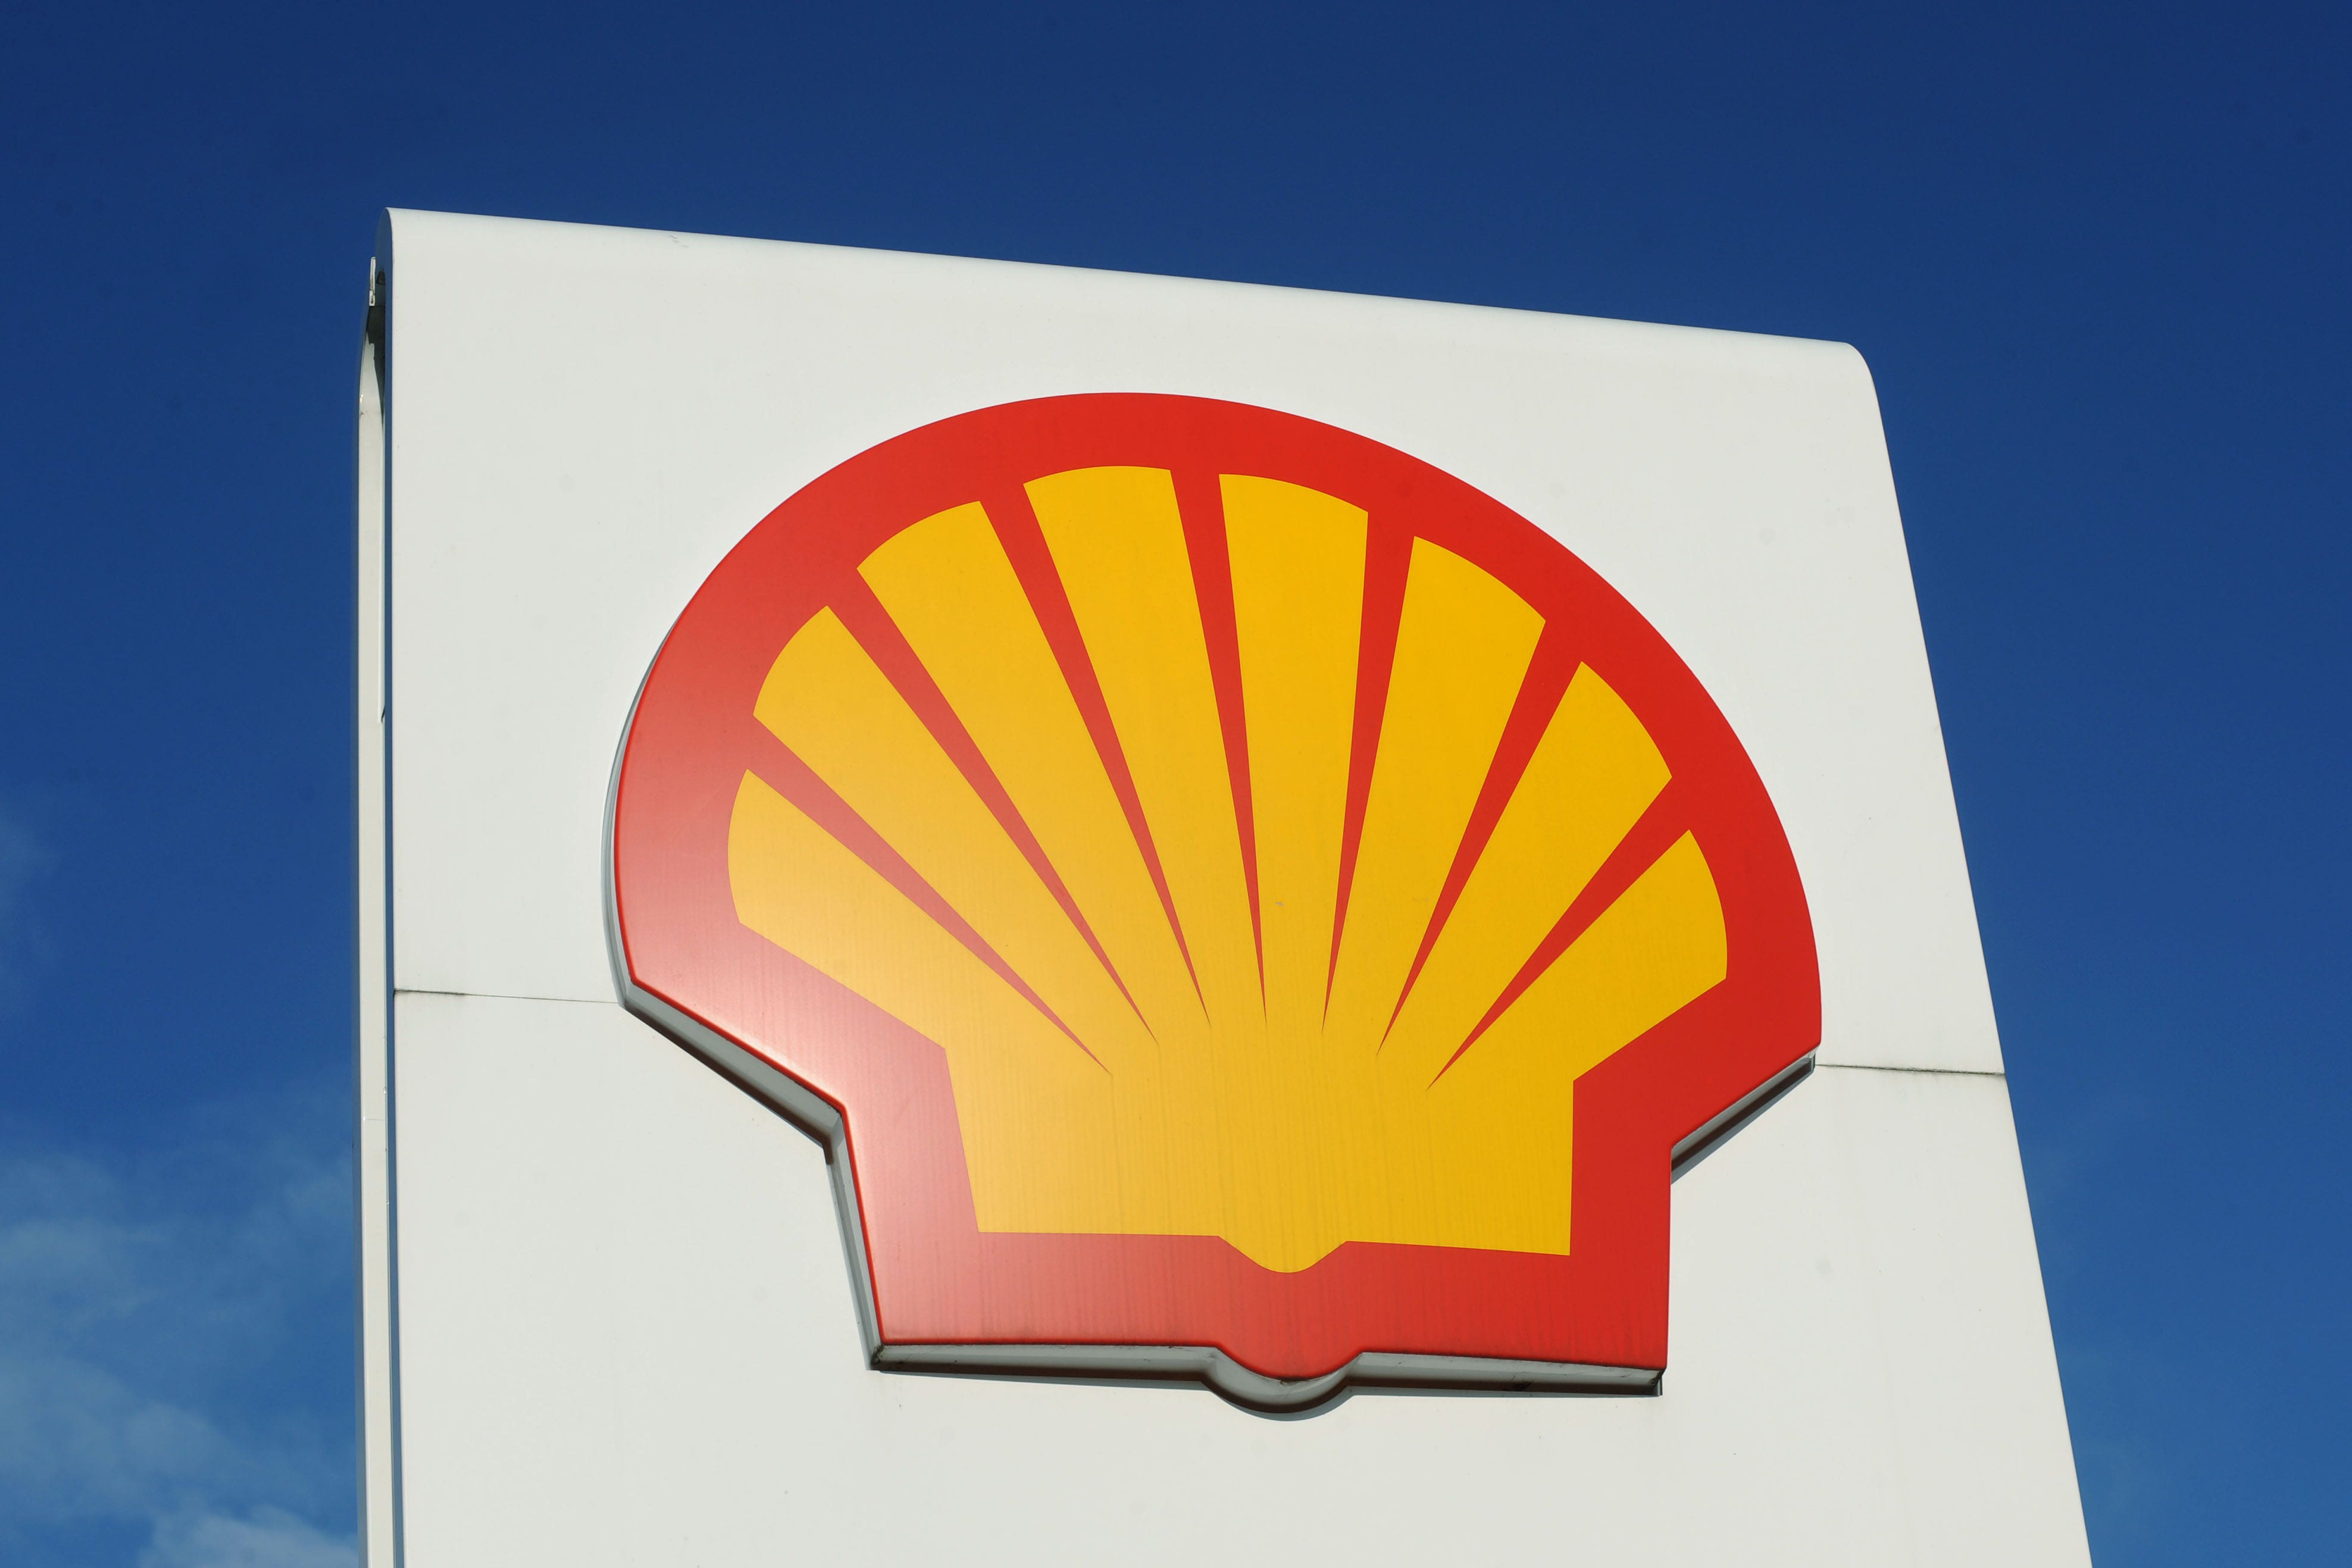 New Shell boss Wael Sawan has put his mark on the oil major